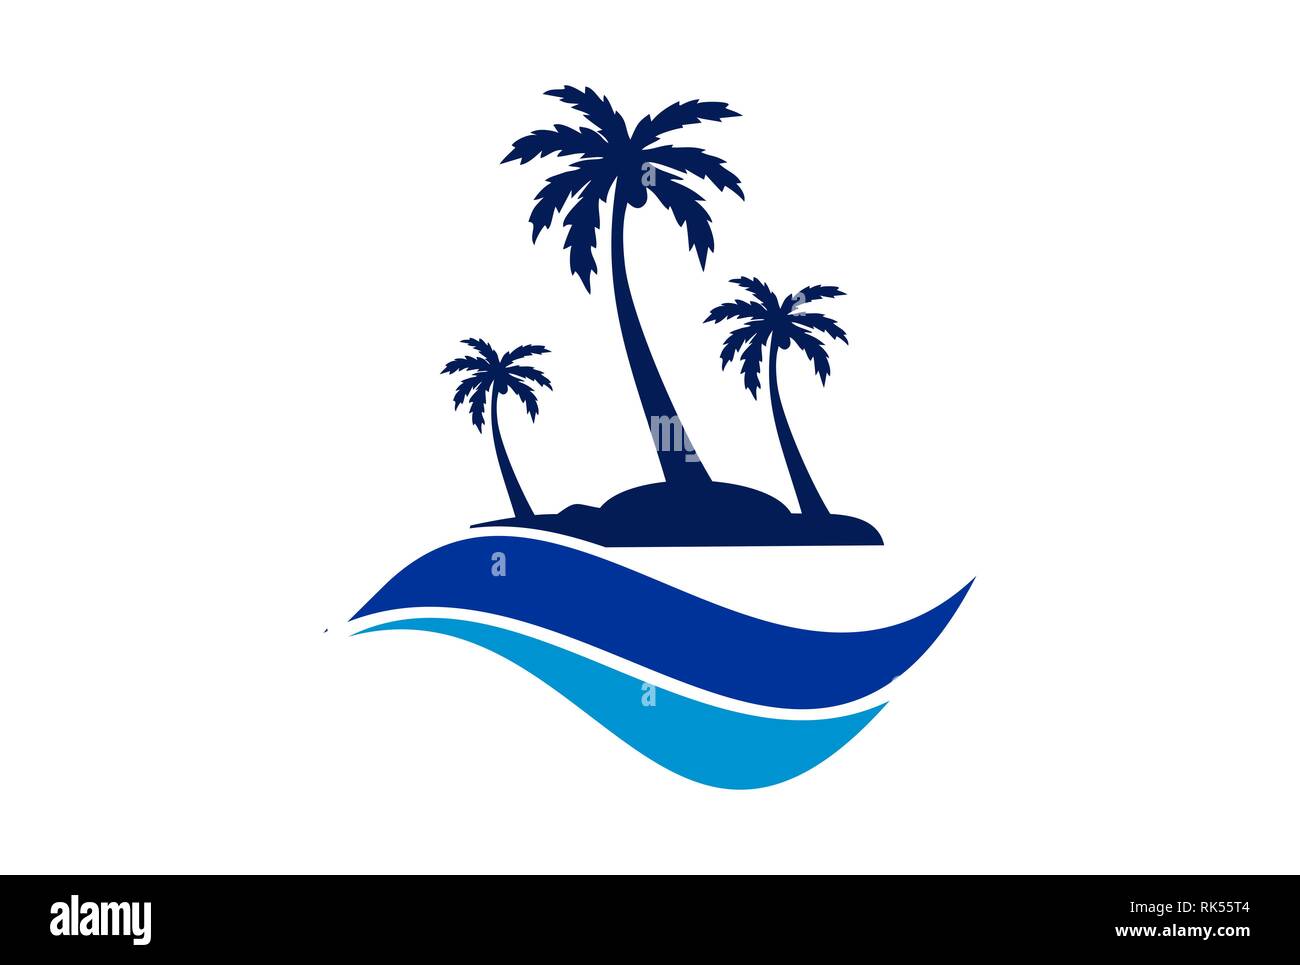 abstract archipelago island vector logo icon for tour brand Stock Photo